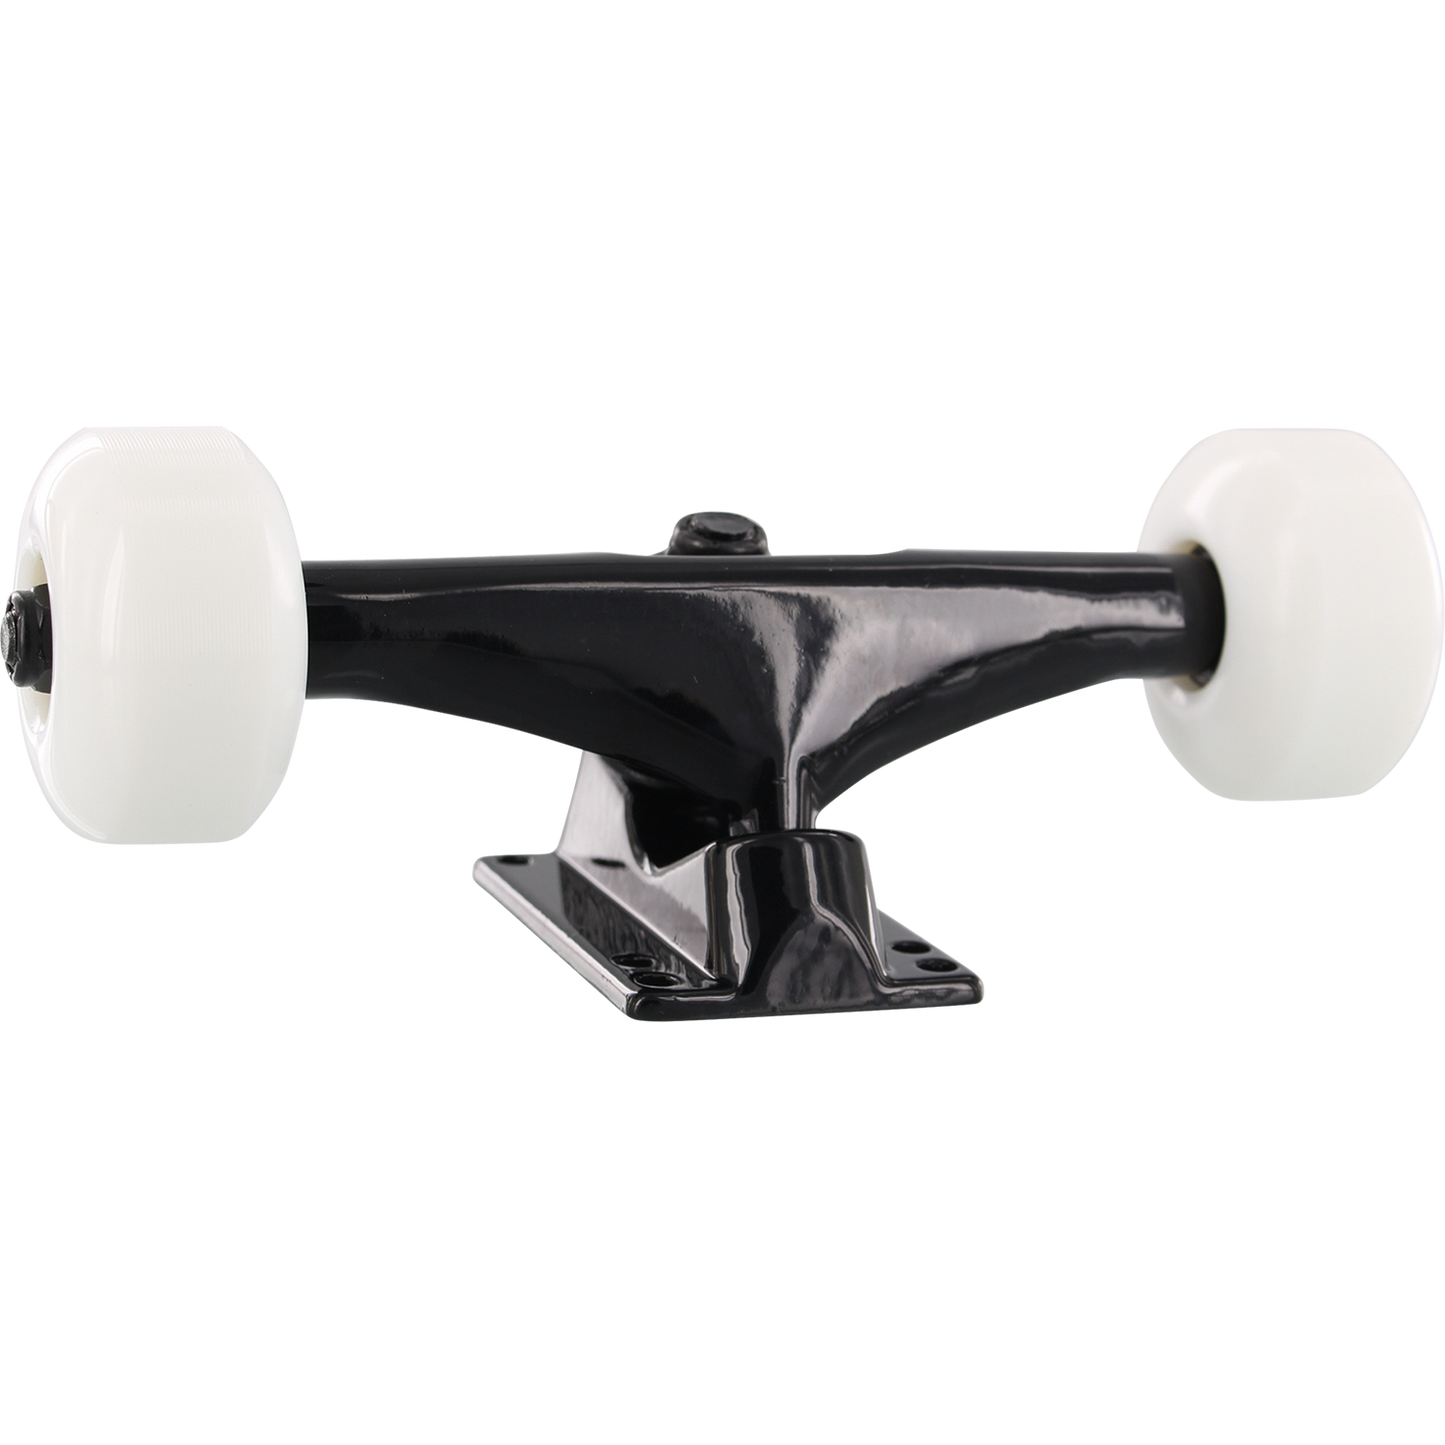 Essentials Assembly 5.5 Black W/White 54mm Skateboard Trucks (Set of 2)